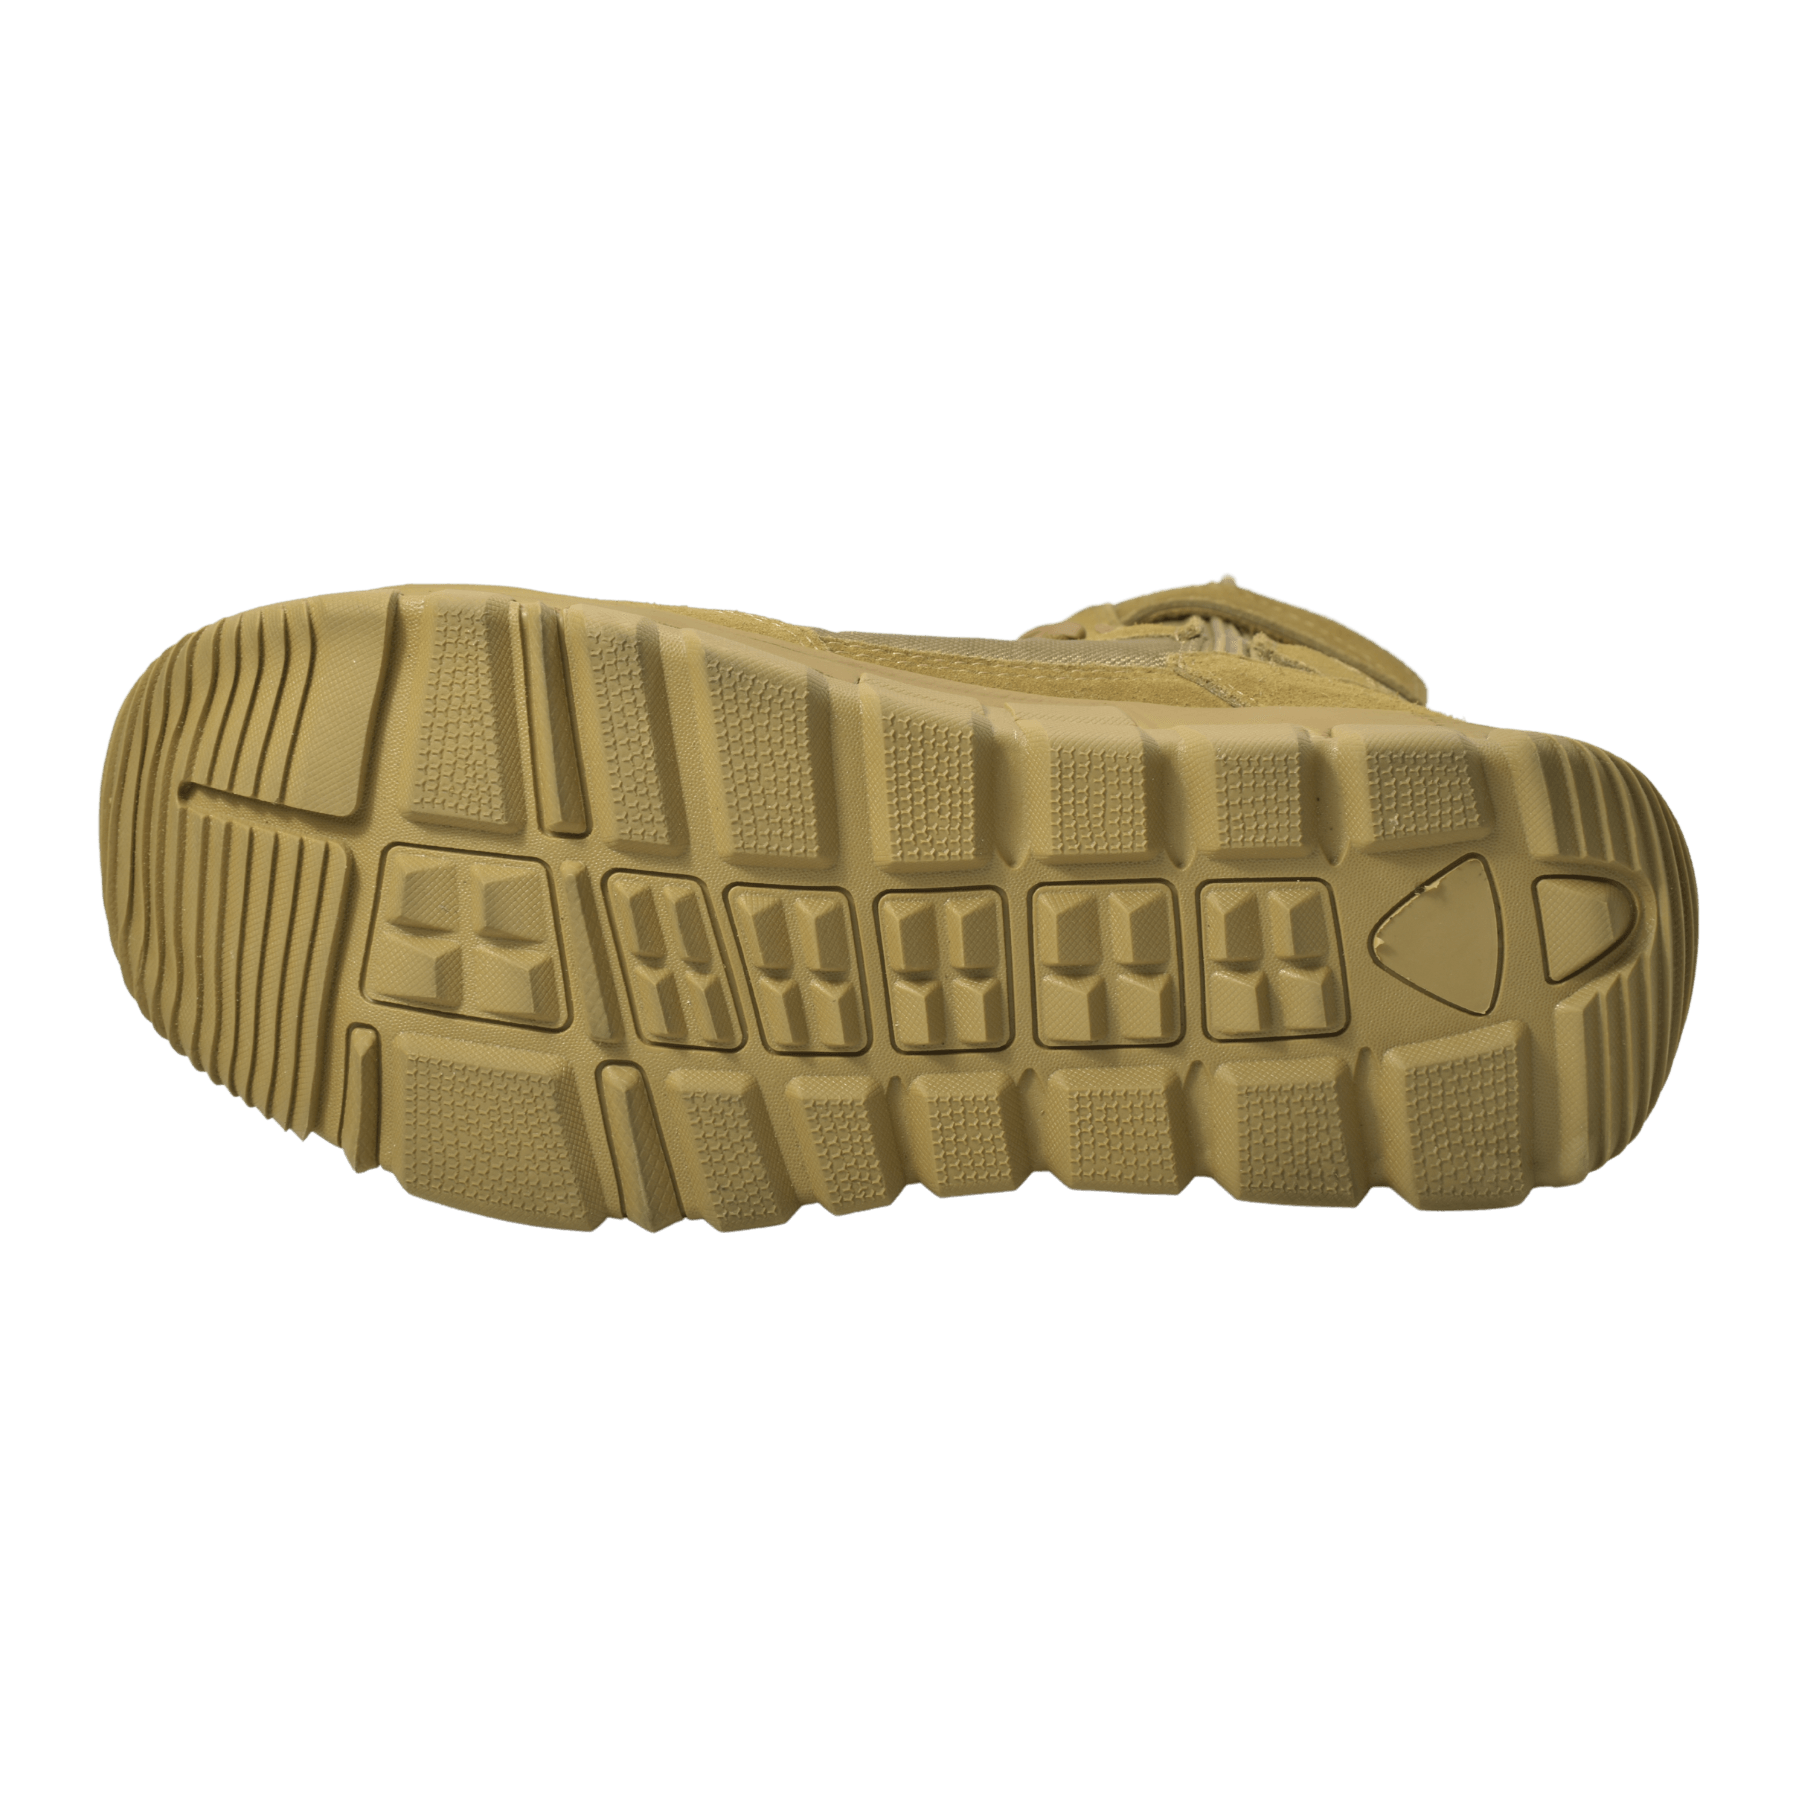 AdTec Men's 9" Suede Leather Side Zipper Composite Toe Tactical Boot Coyote - Flyclothing LLC